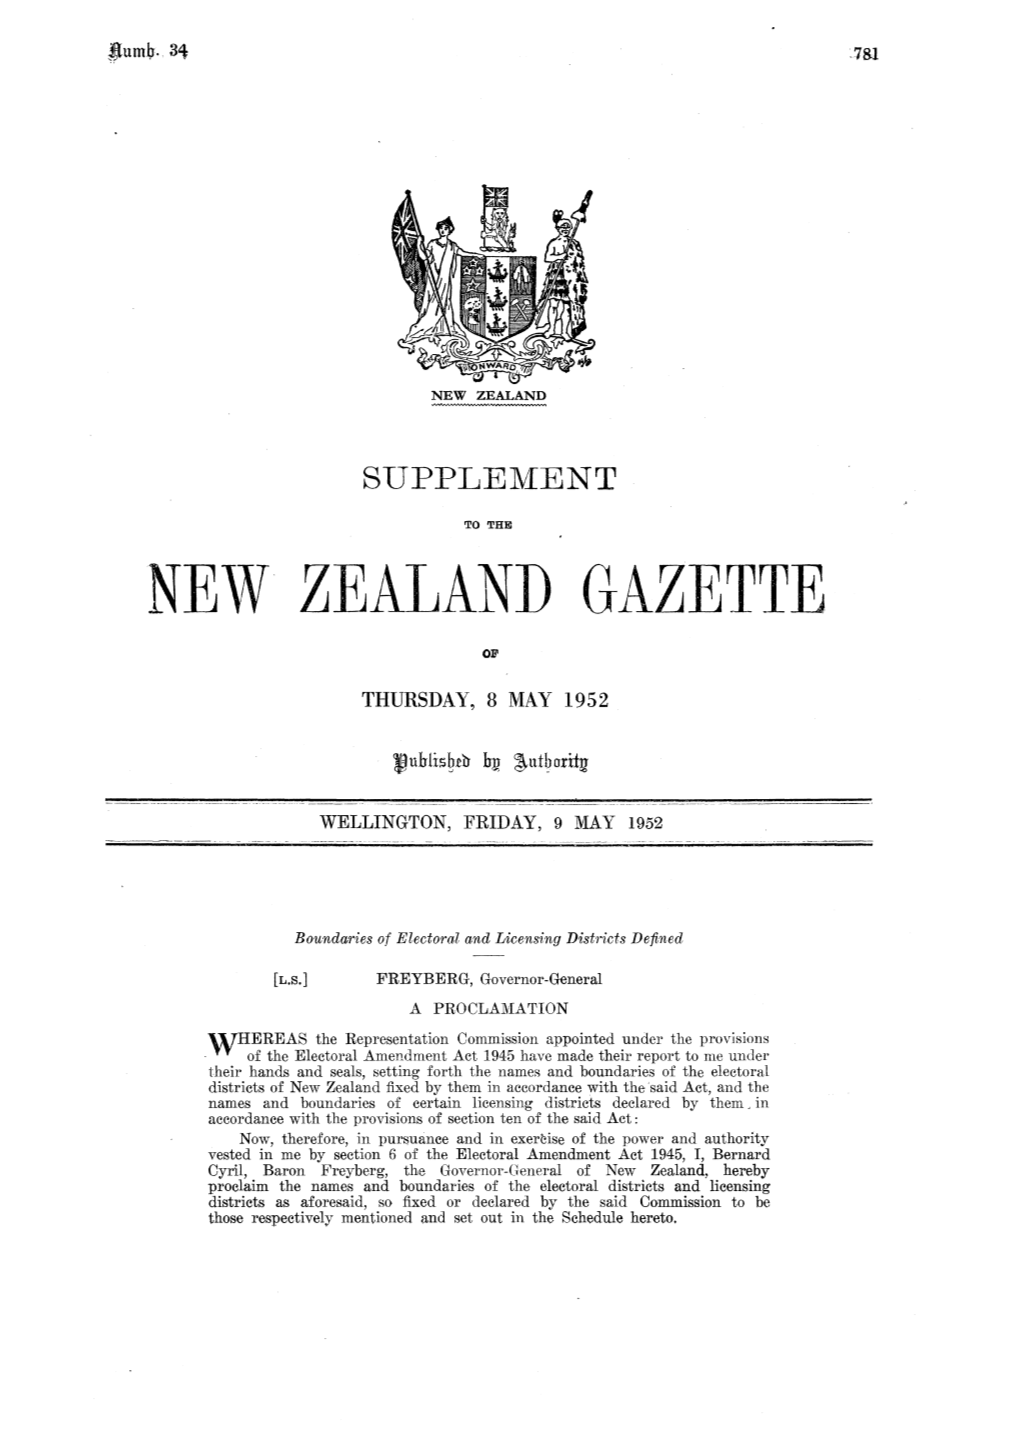 New. Zealand Gazette